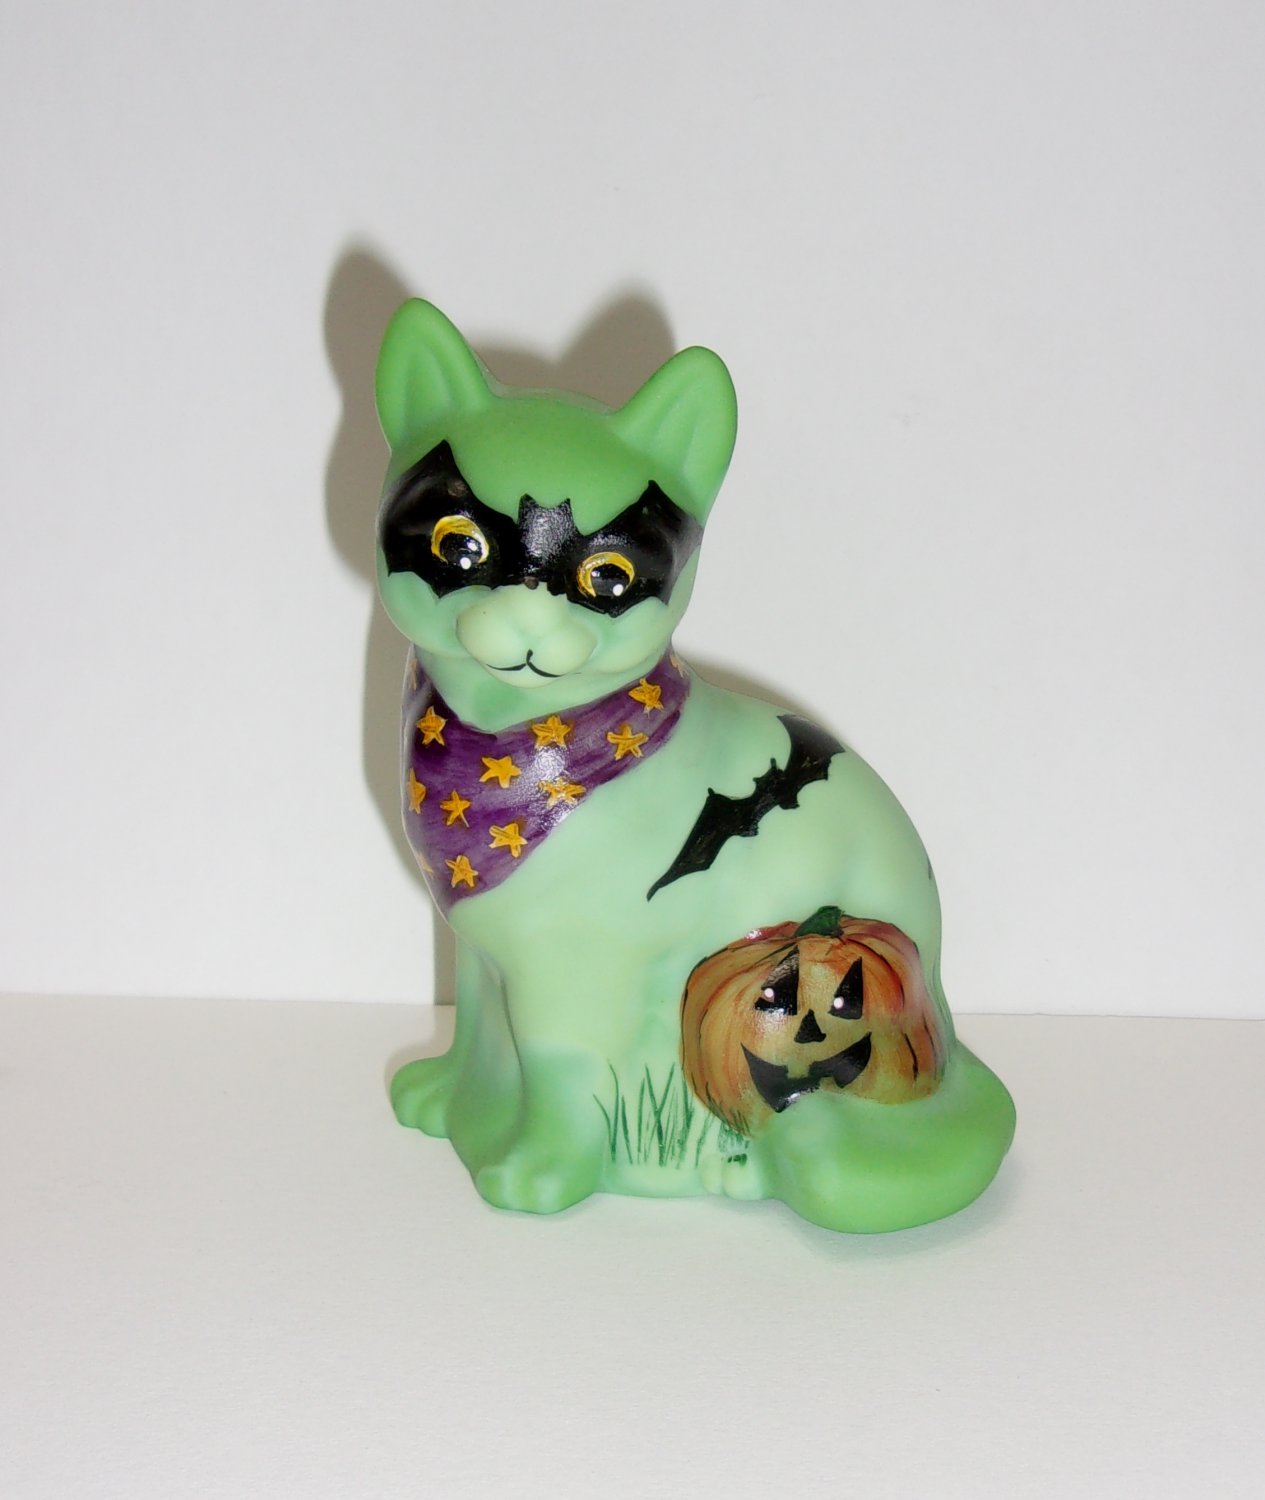 Fenton Glass Green Halloween Batman Cat Figurine FAGCA 2020 Ltd Ed of 18 Burton